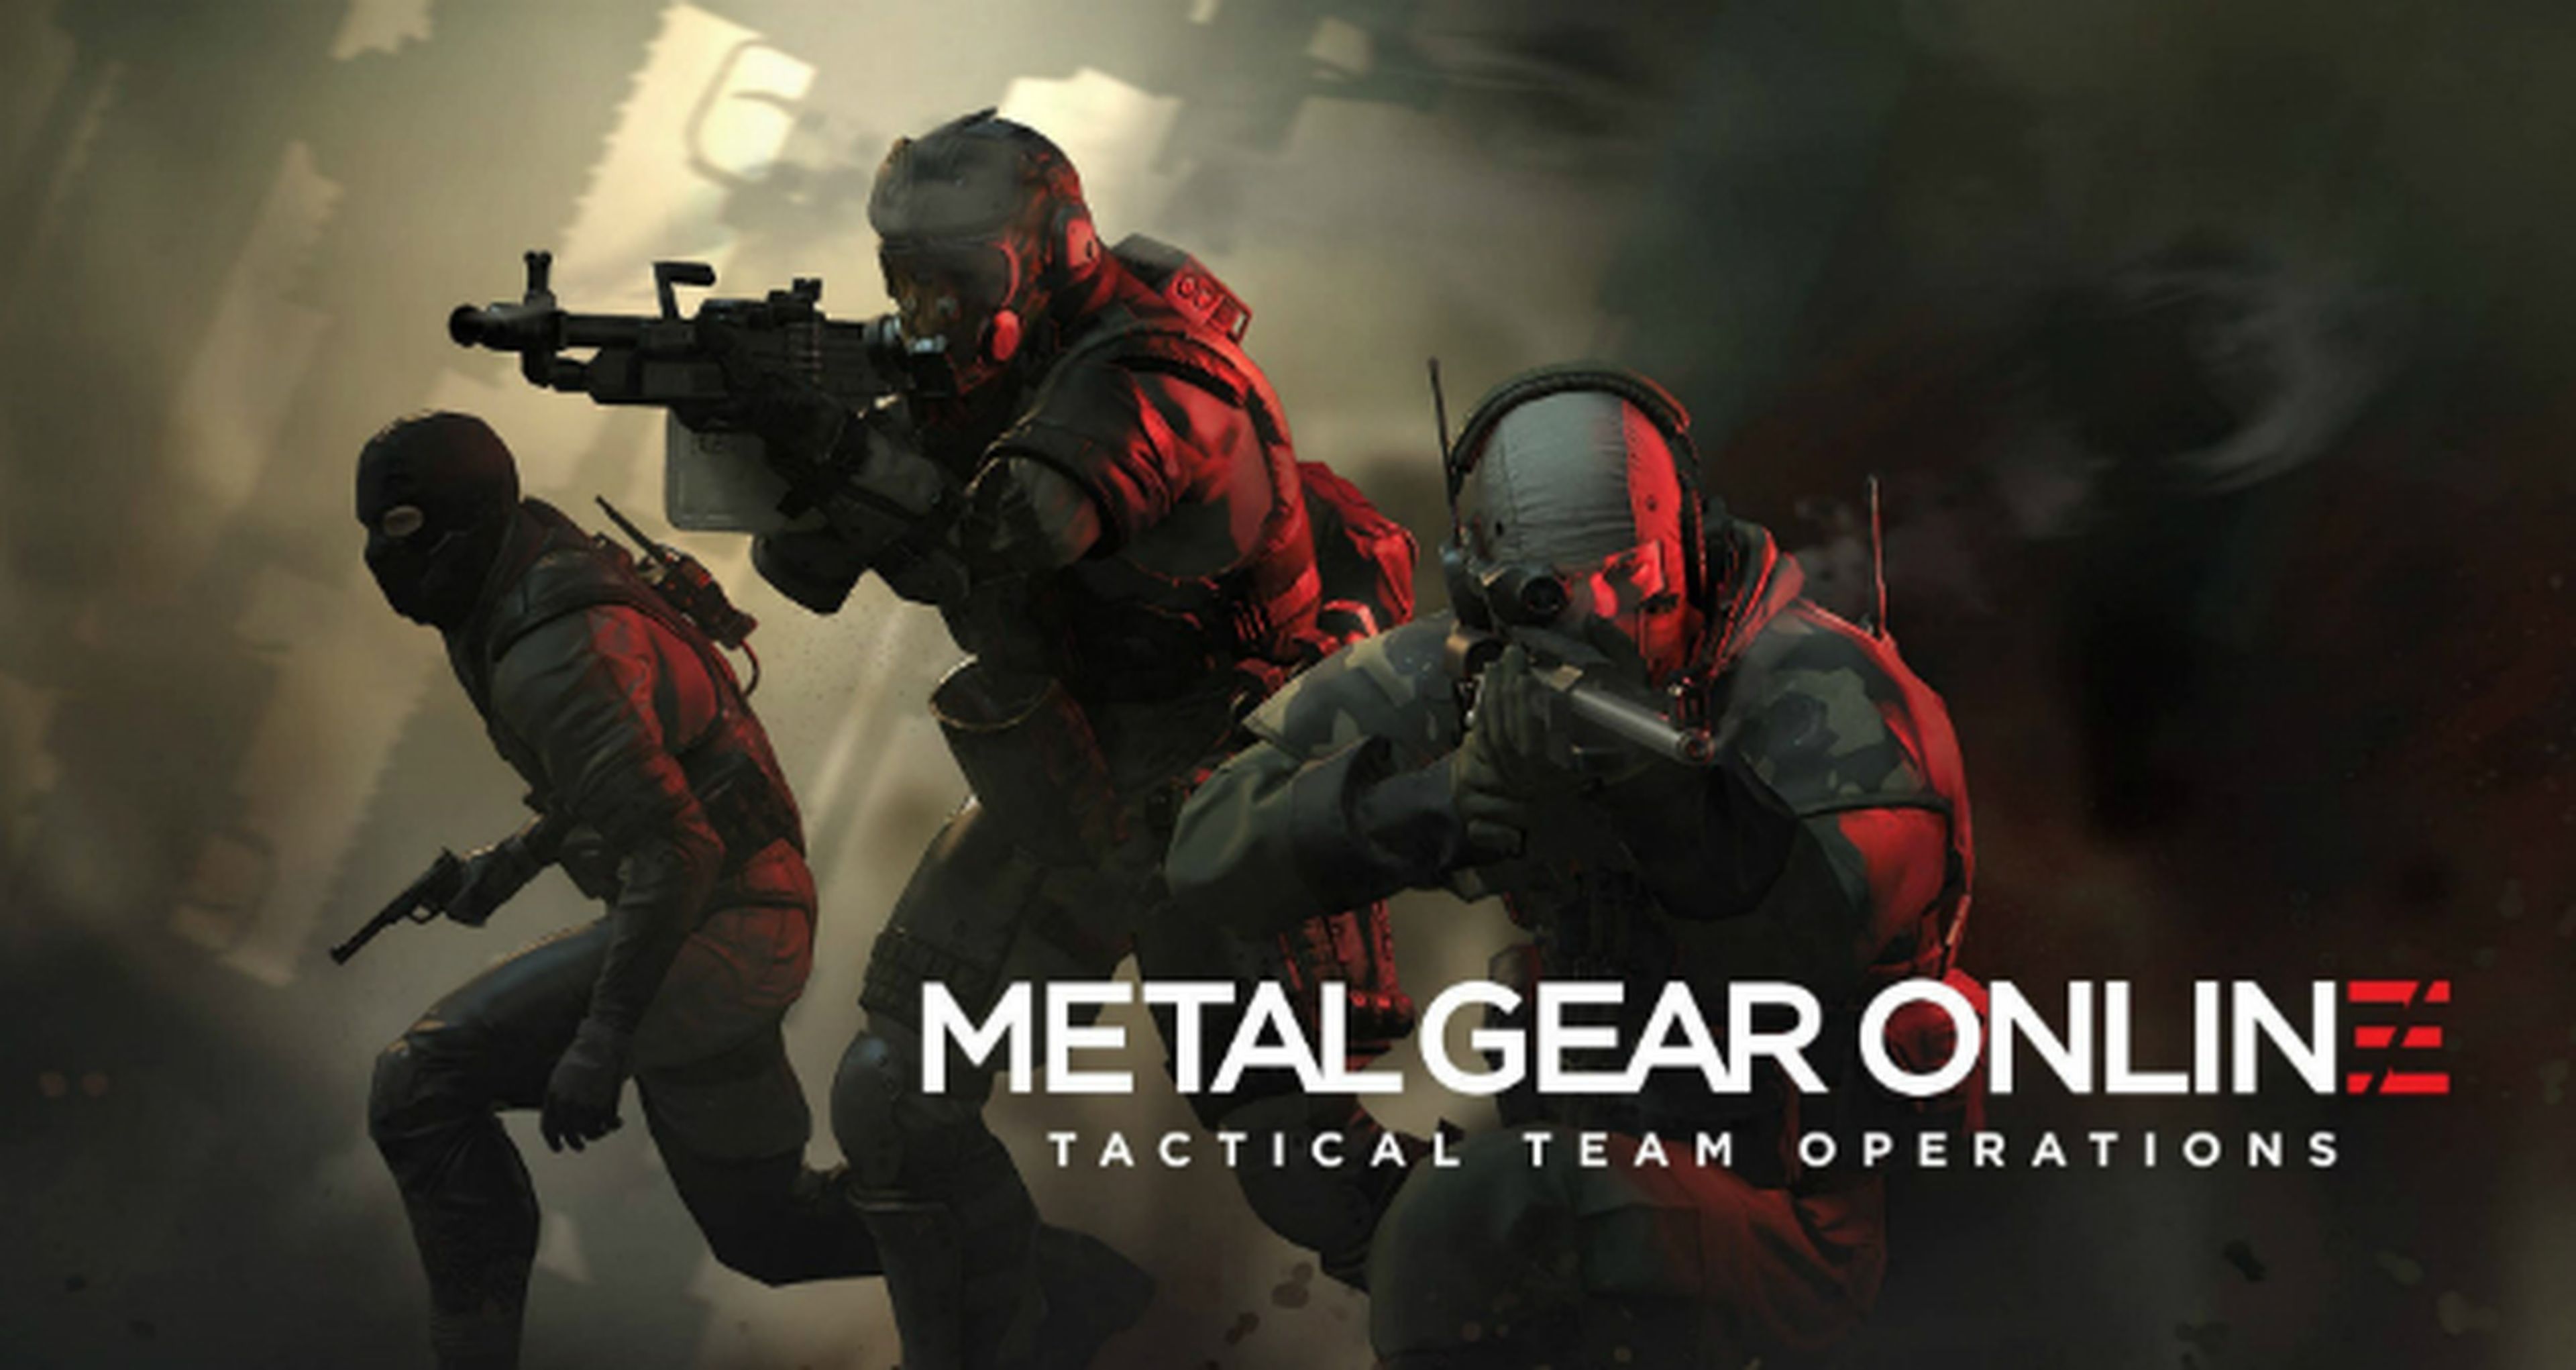 Metal Gear Solid V The Phantom Pain: Metal Gear Online llega hoy a consolas